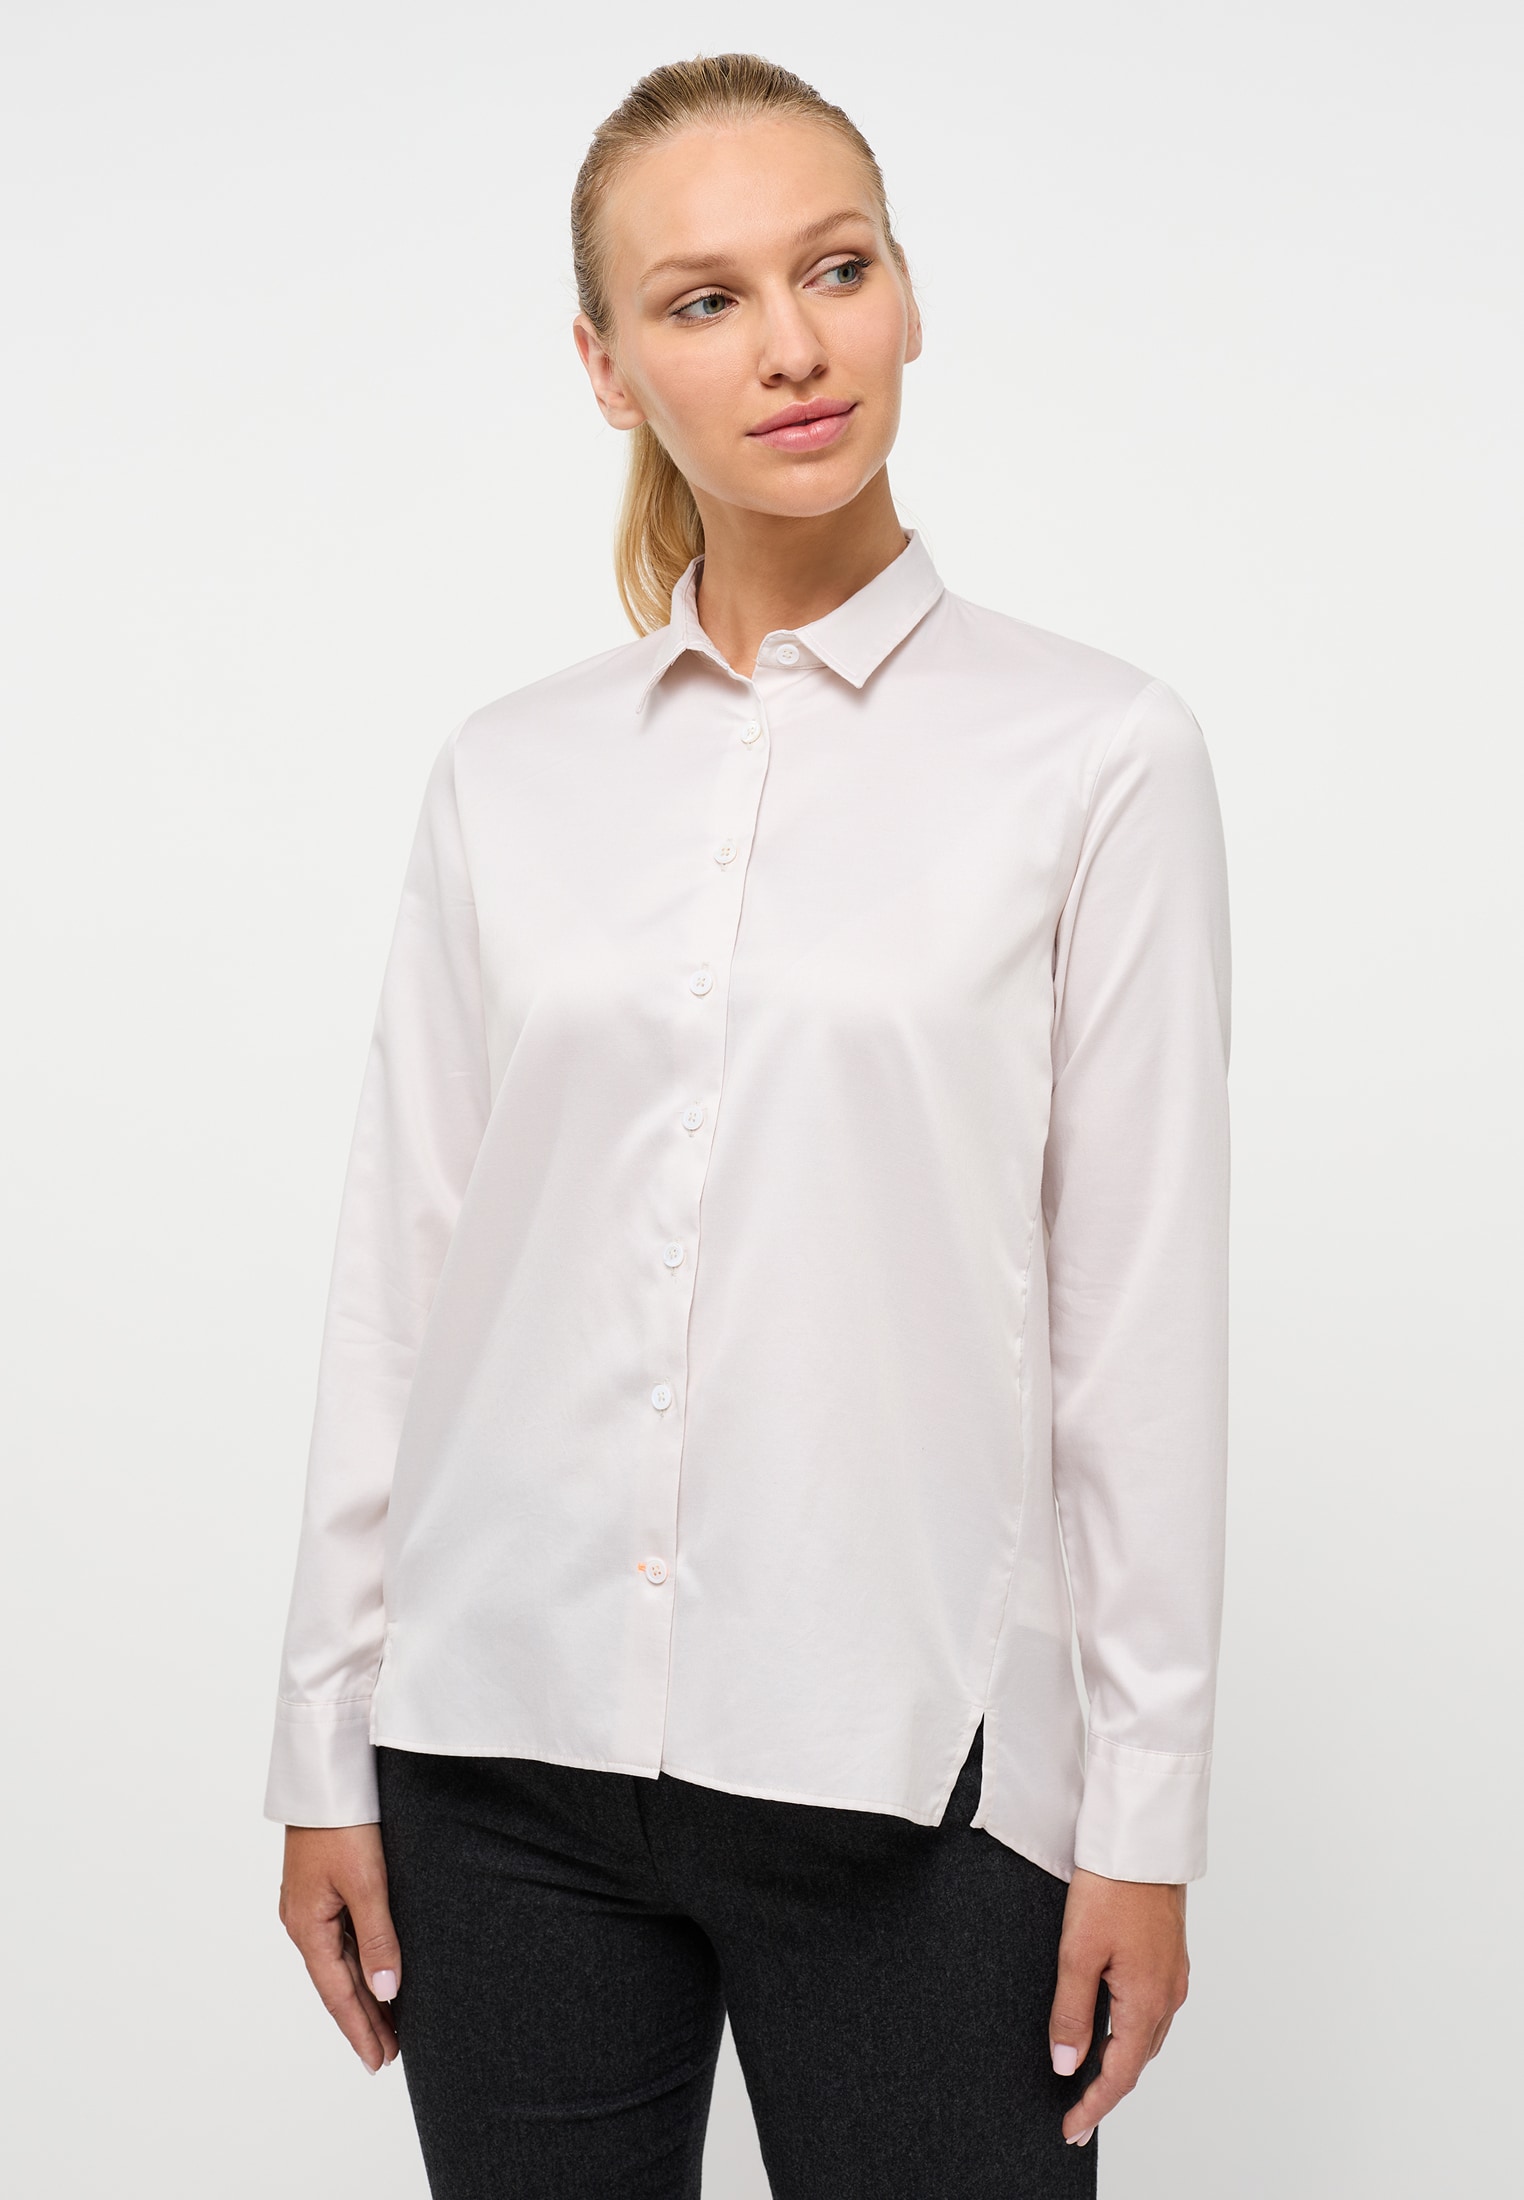 Soft Luxury Shirt Bluse in sand unifarben | sand | 48 | Langarm |  2BL00664-02-11-48-1/1